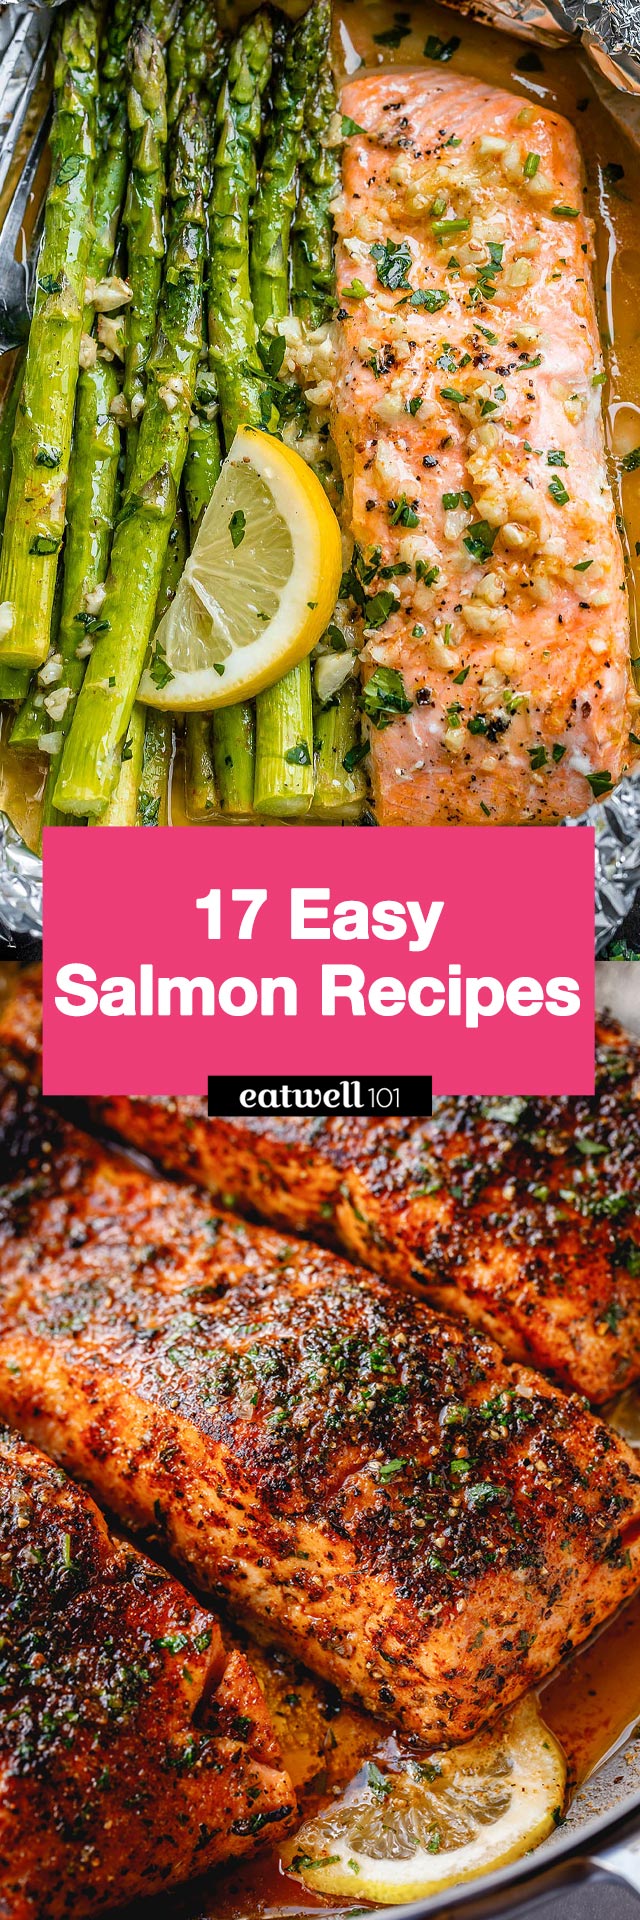 Easy Salmon Recipes: 17 Salmon Recipes — Eatwell101